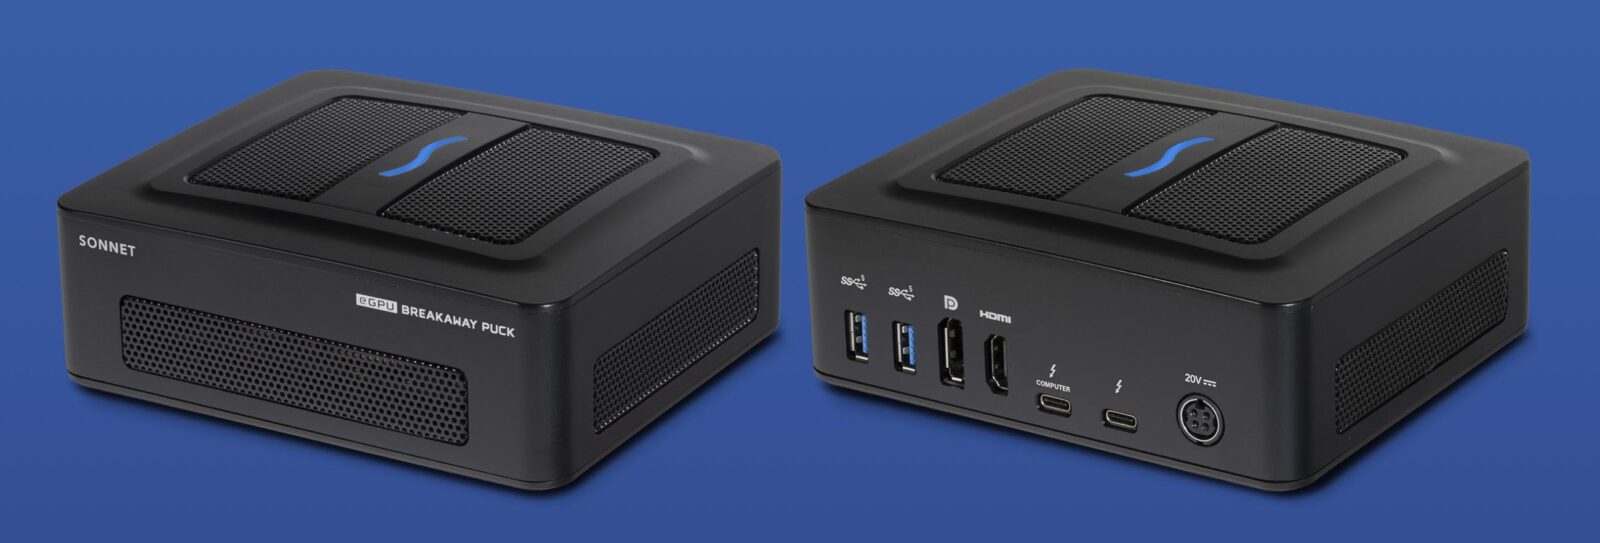 Sonnet ha presentato due eGPU/dock portatili con supporto schermi Thunderbolt/USB-C